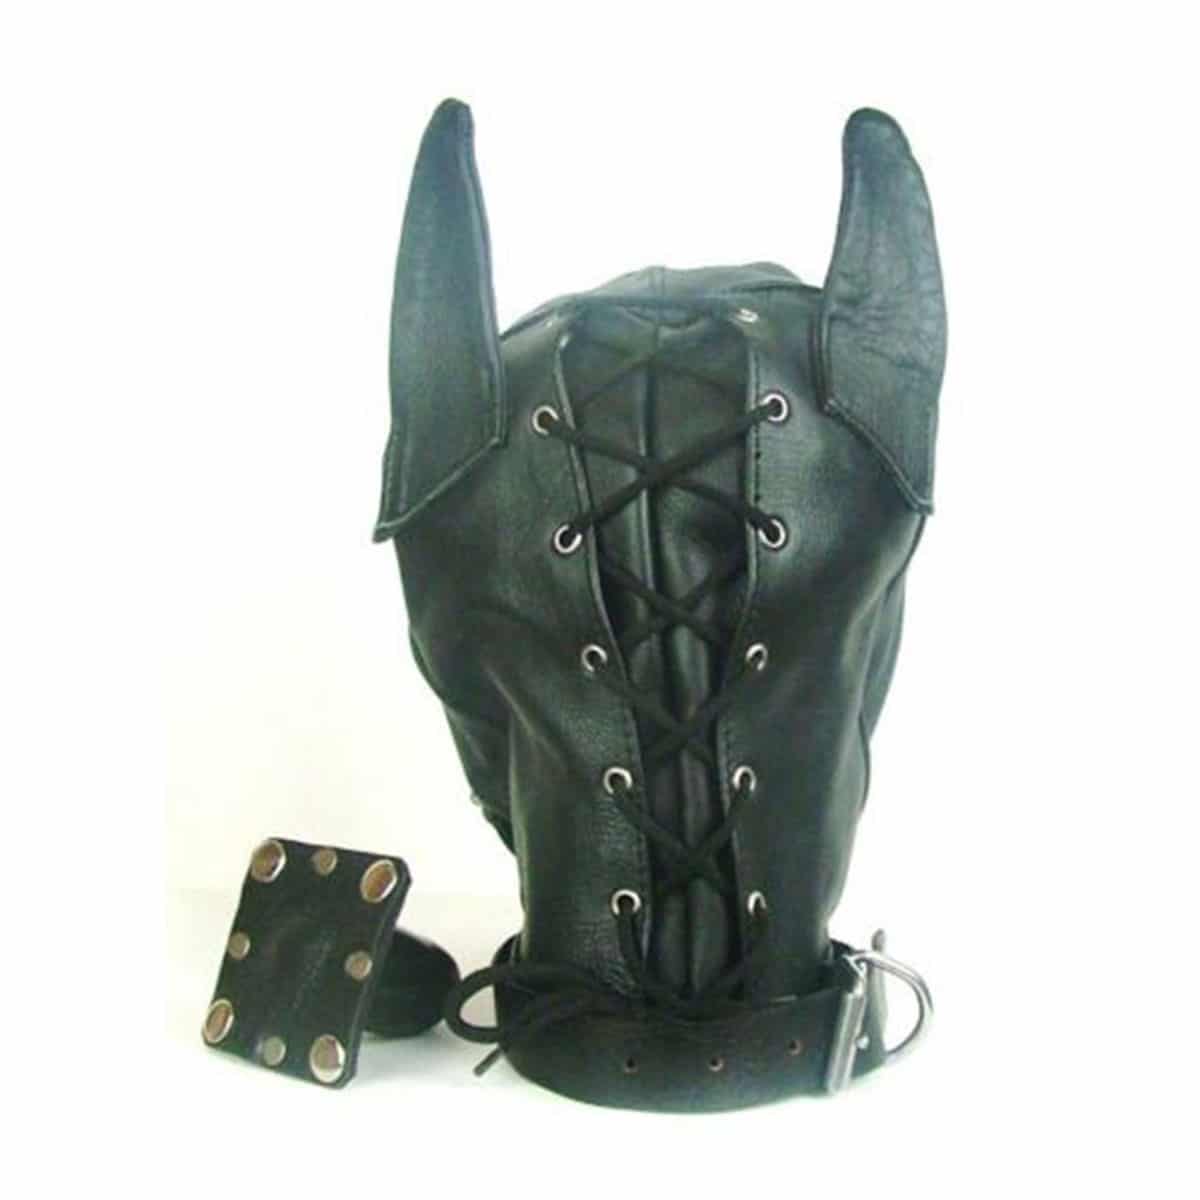 Unisex Leather Dog Puppy Bondage Hood with Mouth Gag - D1-BLK